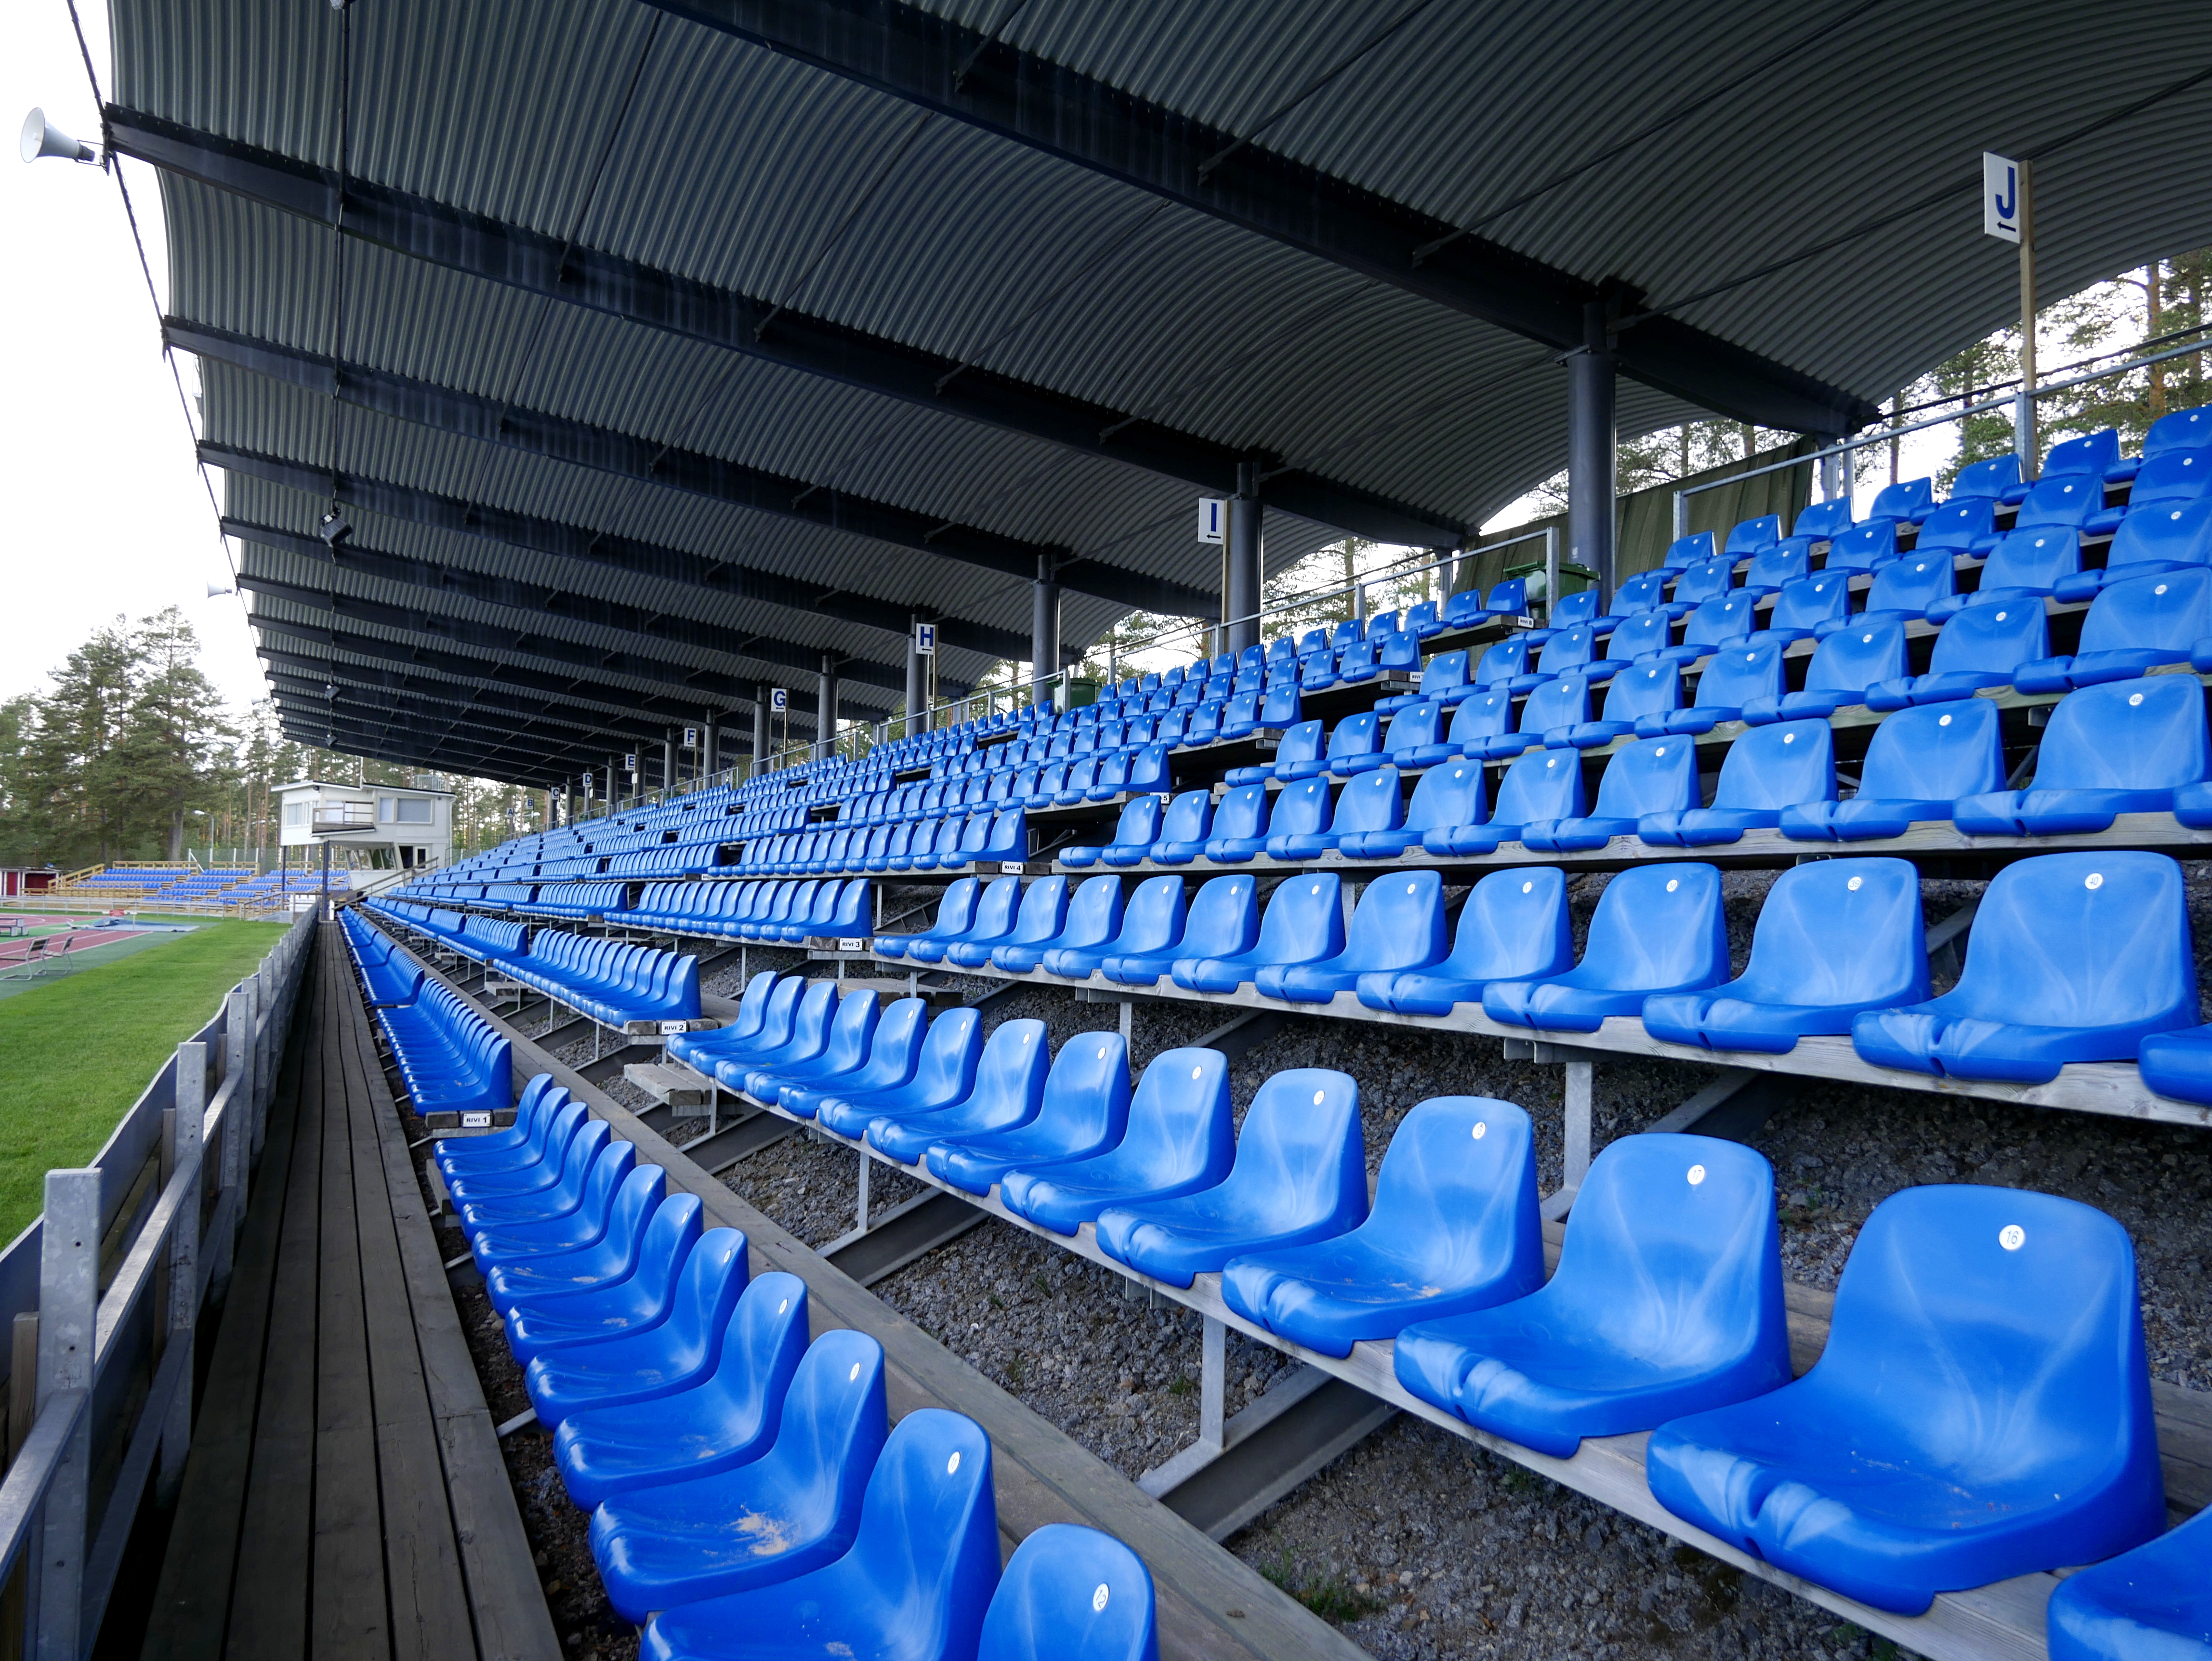 File:Blue stadium seats 2017.jpg - Wikimedia Commons